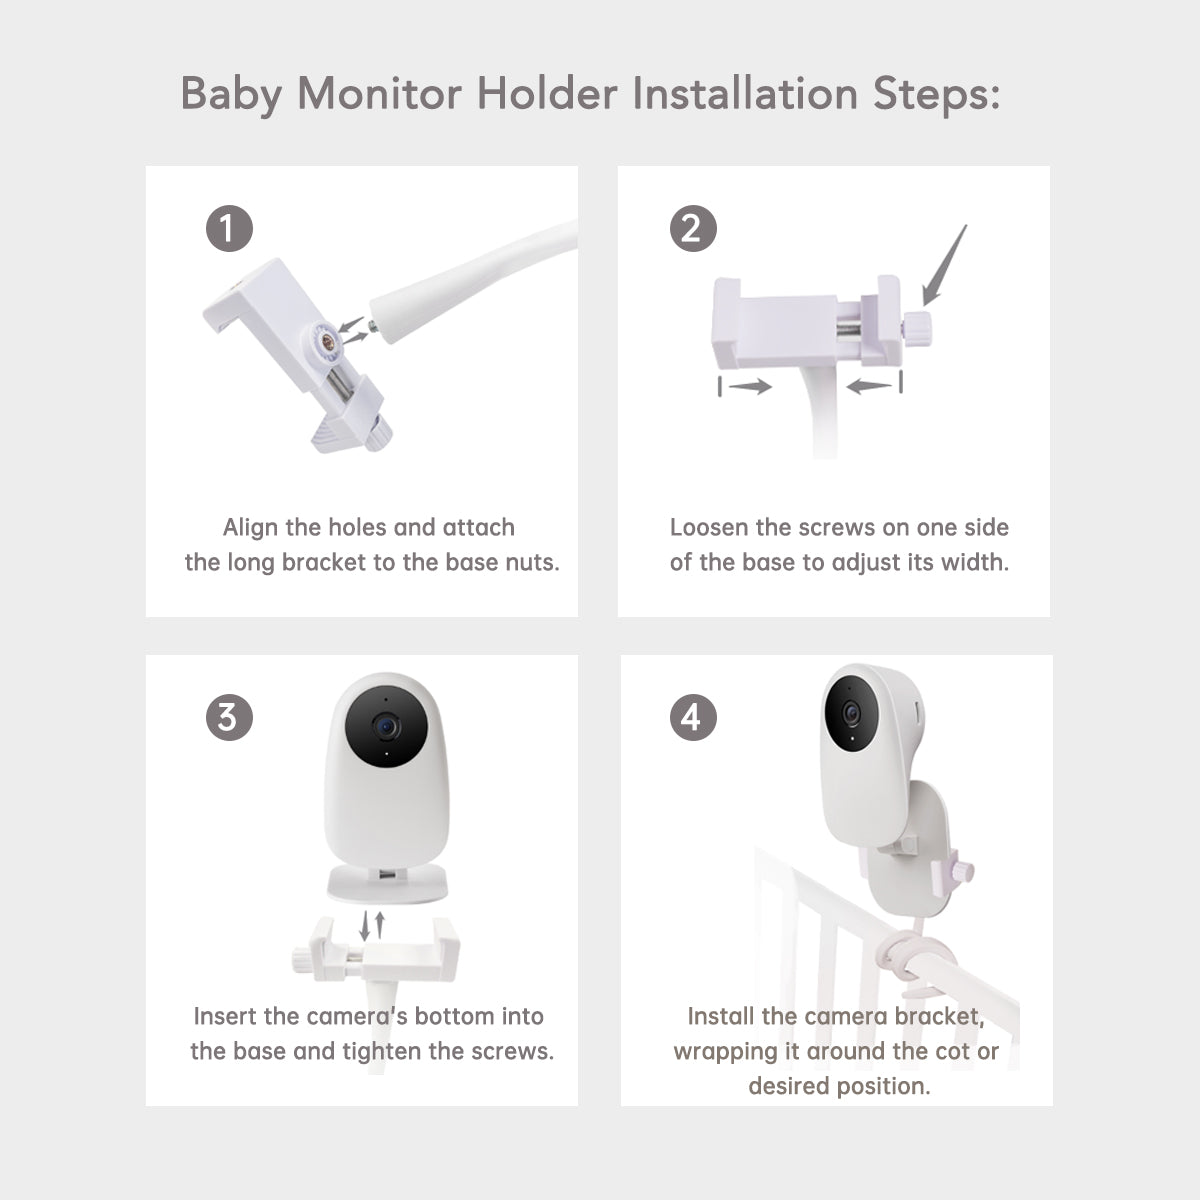 Baby Monitor Holder